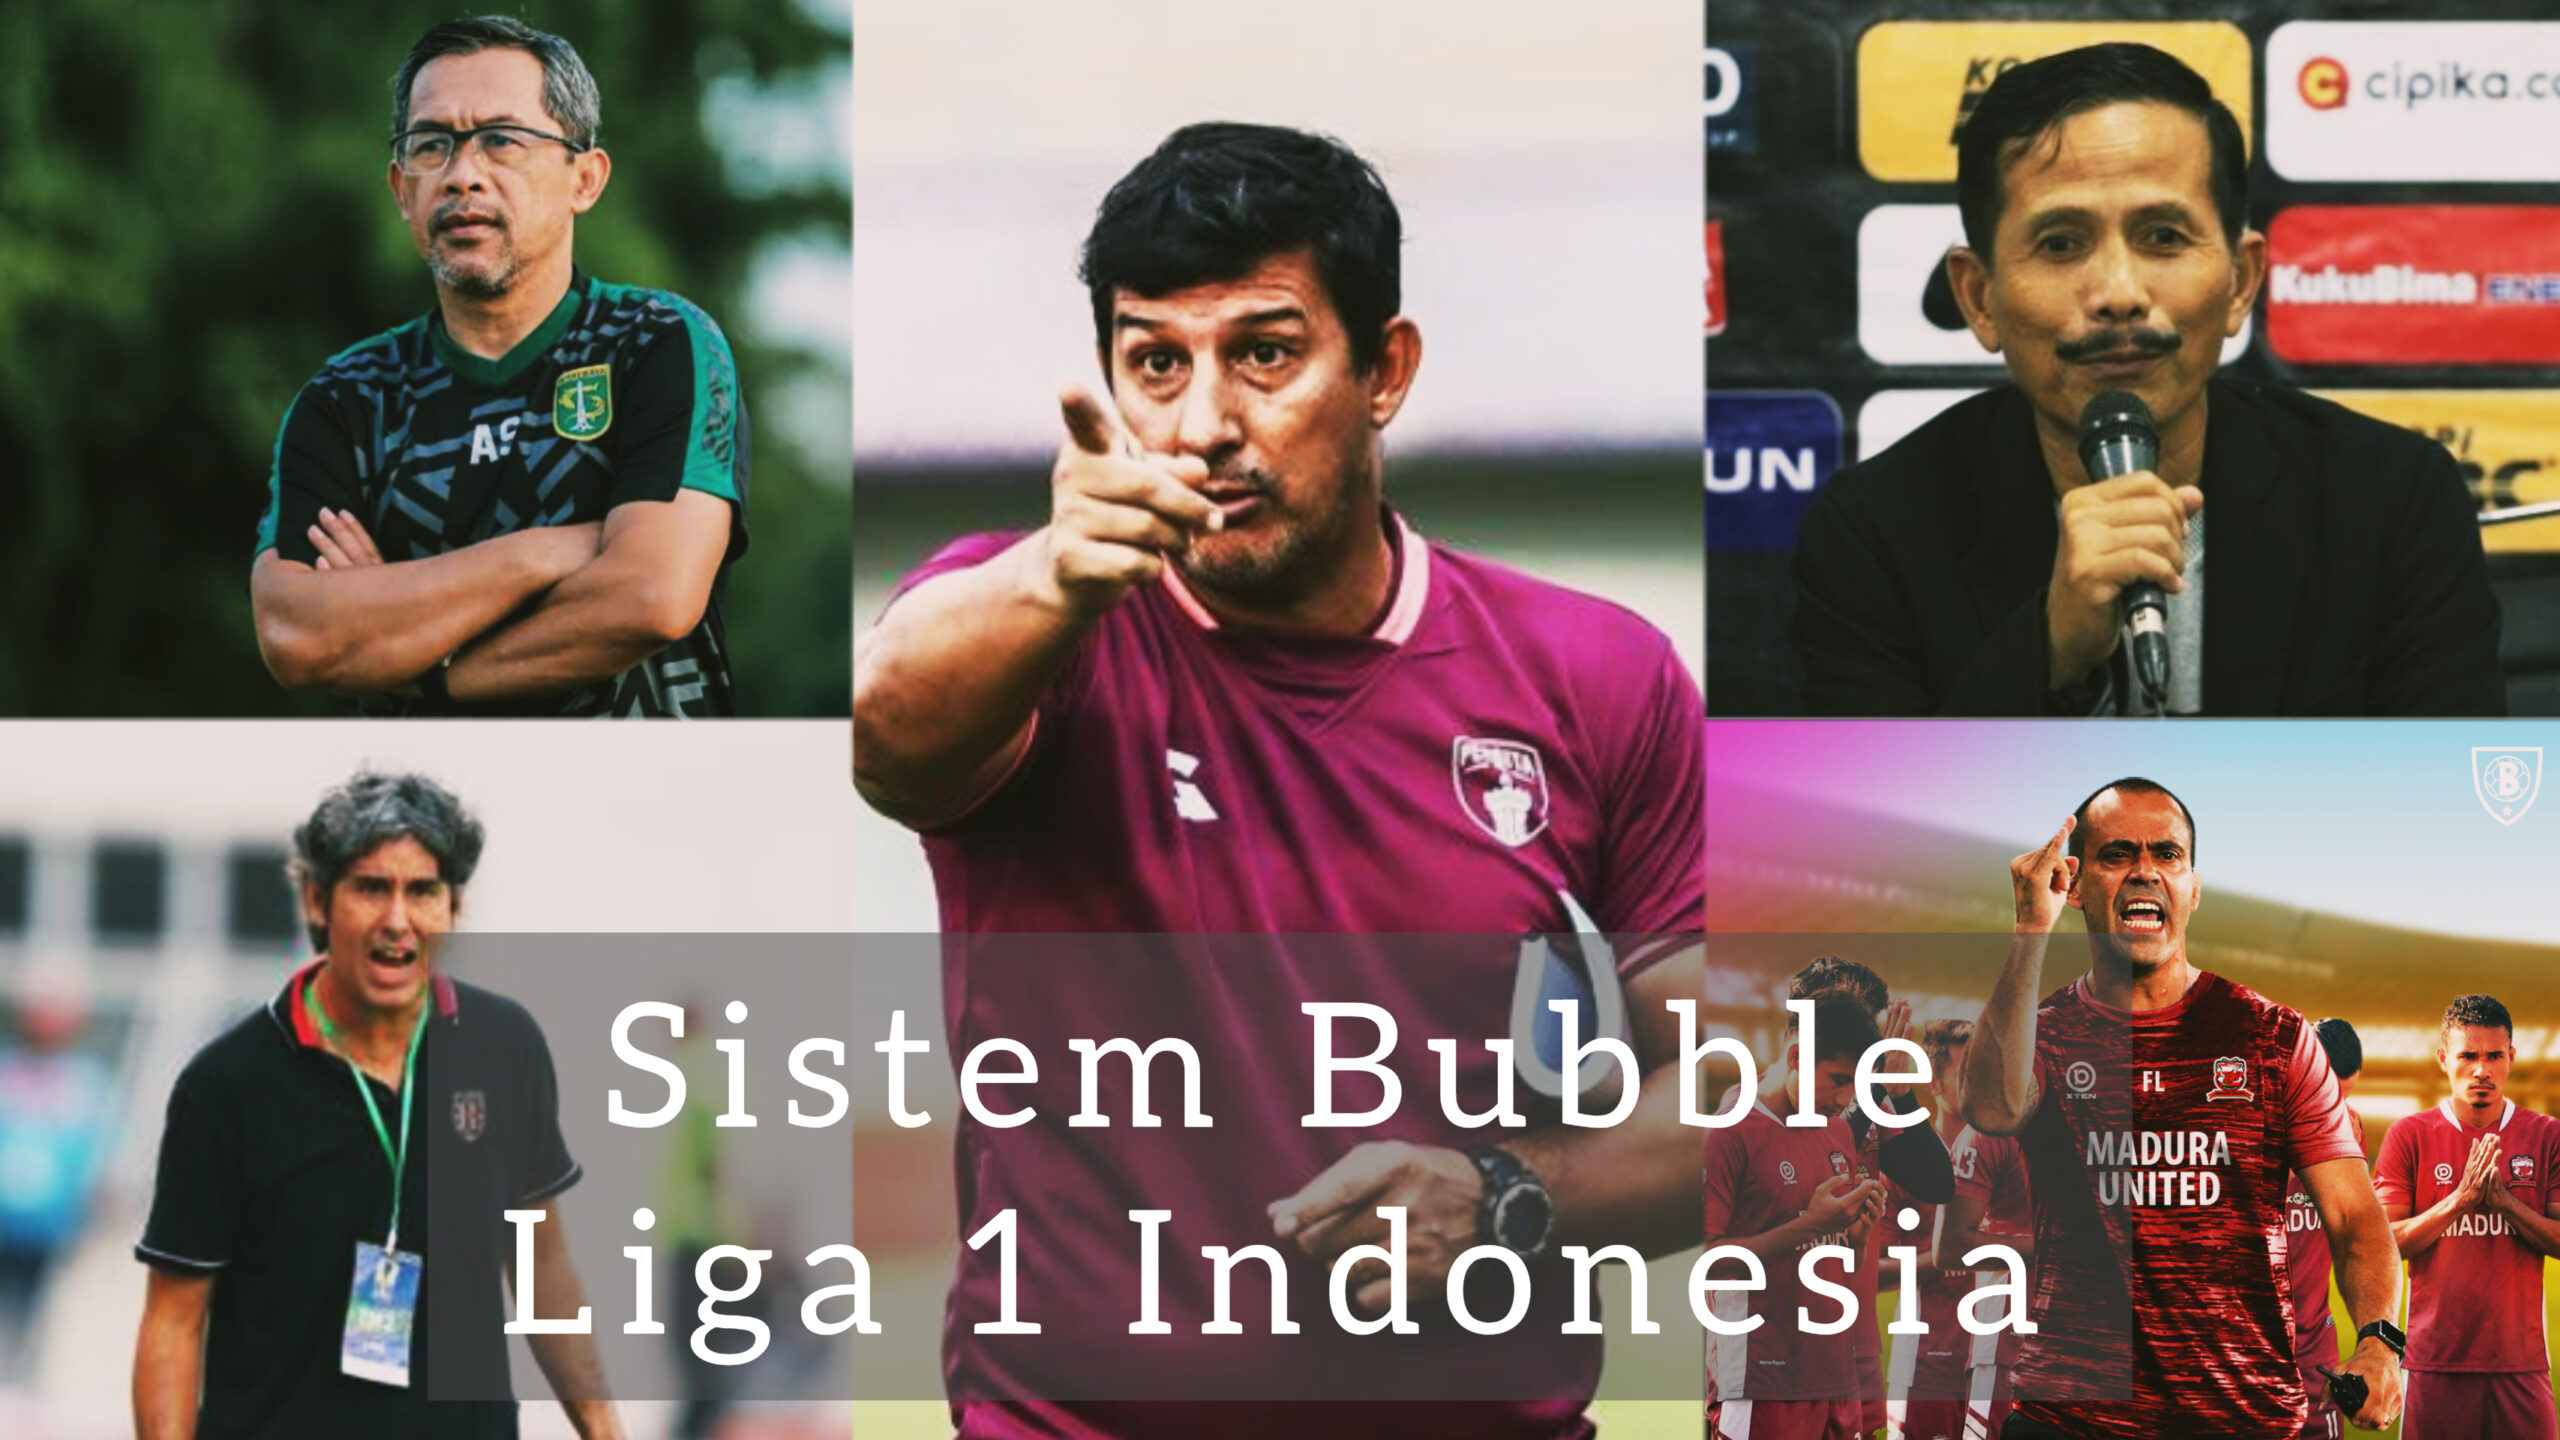 Sistem bubble liga 1 indonesia